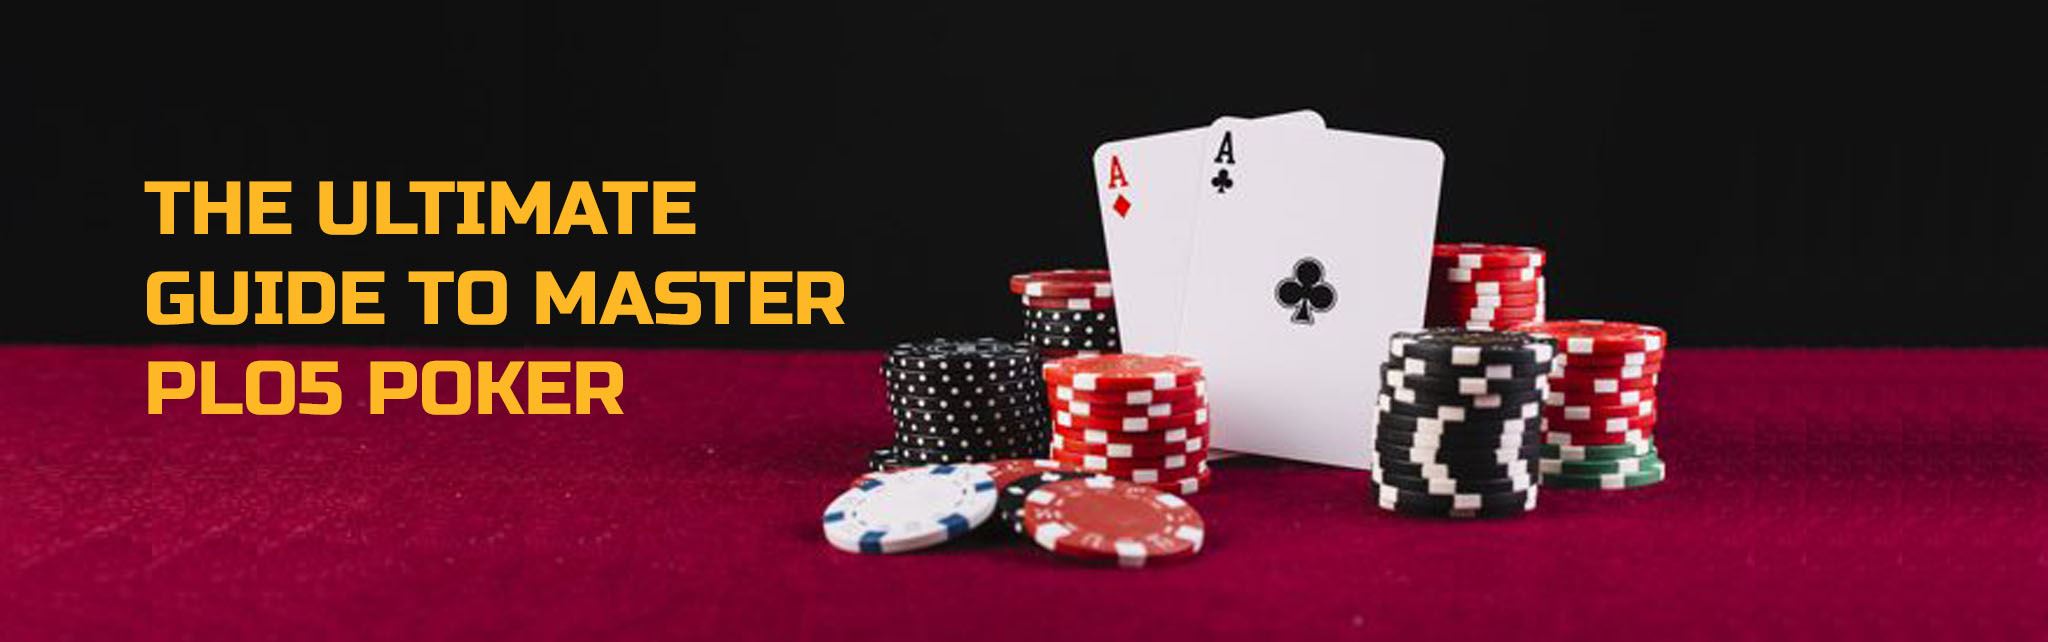 poker online gratis